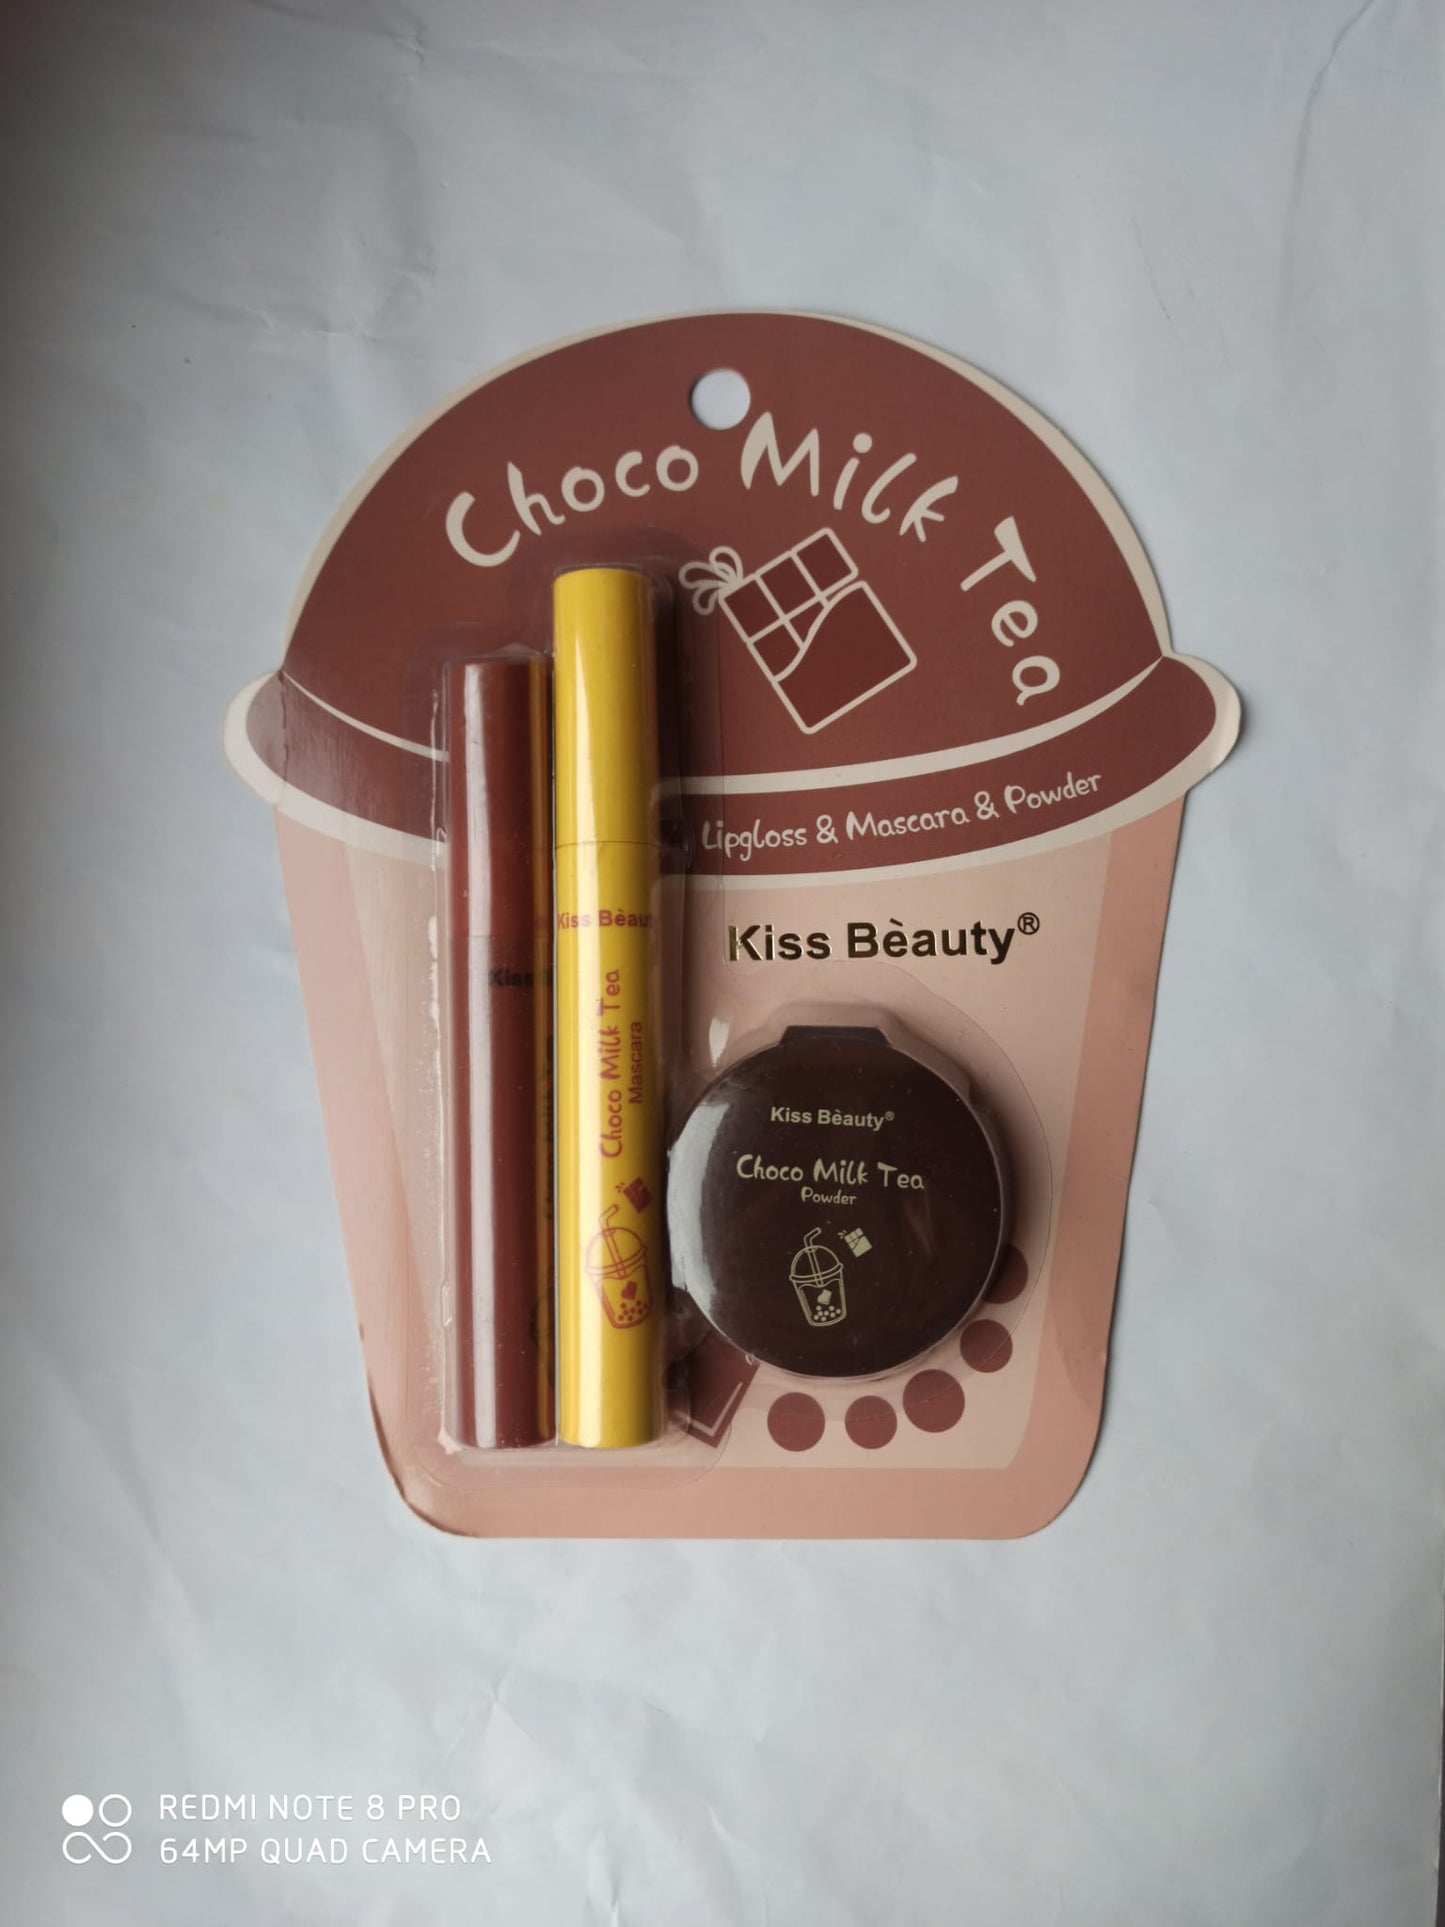 Chocolate Lip Gloss + Mascara + Compact Powder